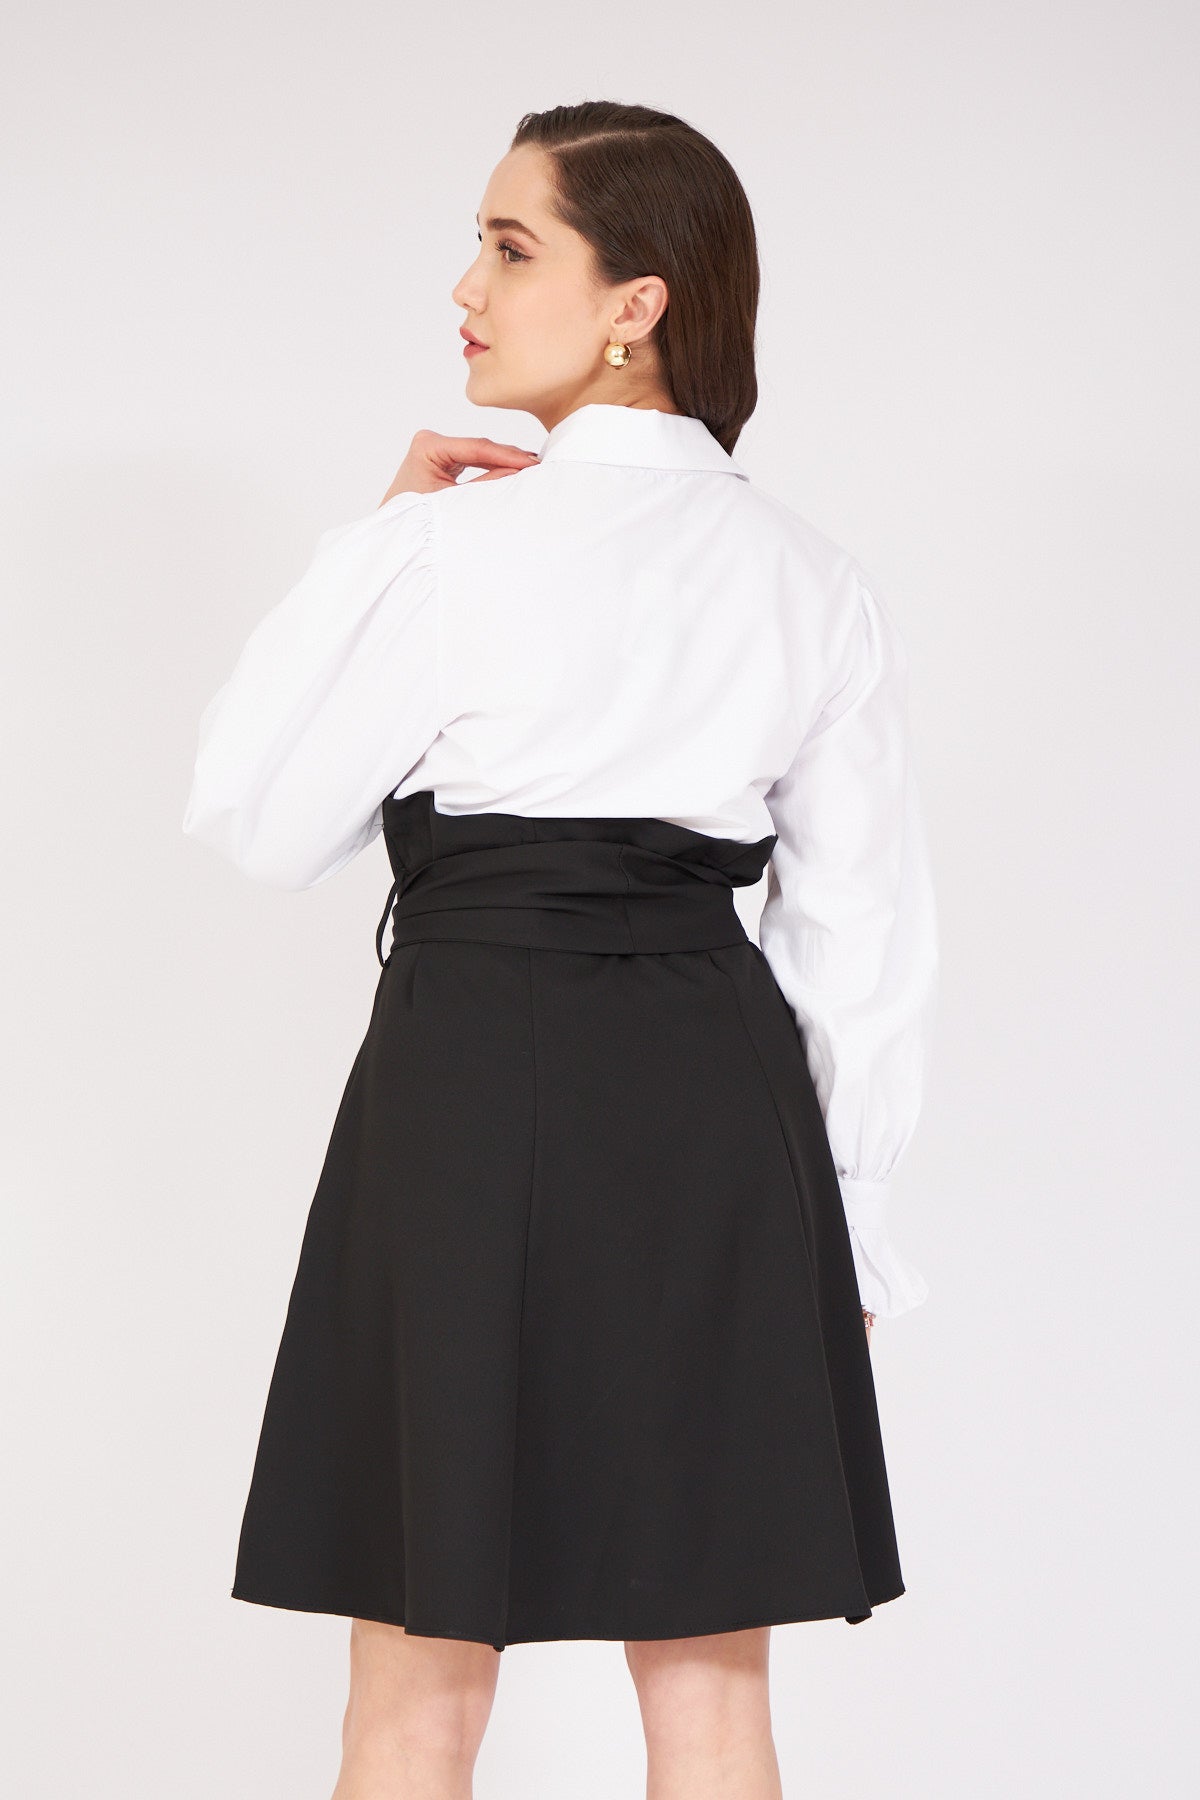 Belted Pleated Shirt Detail Dress - Lebbse